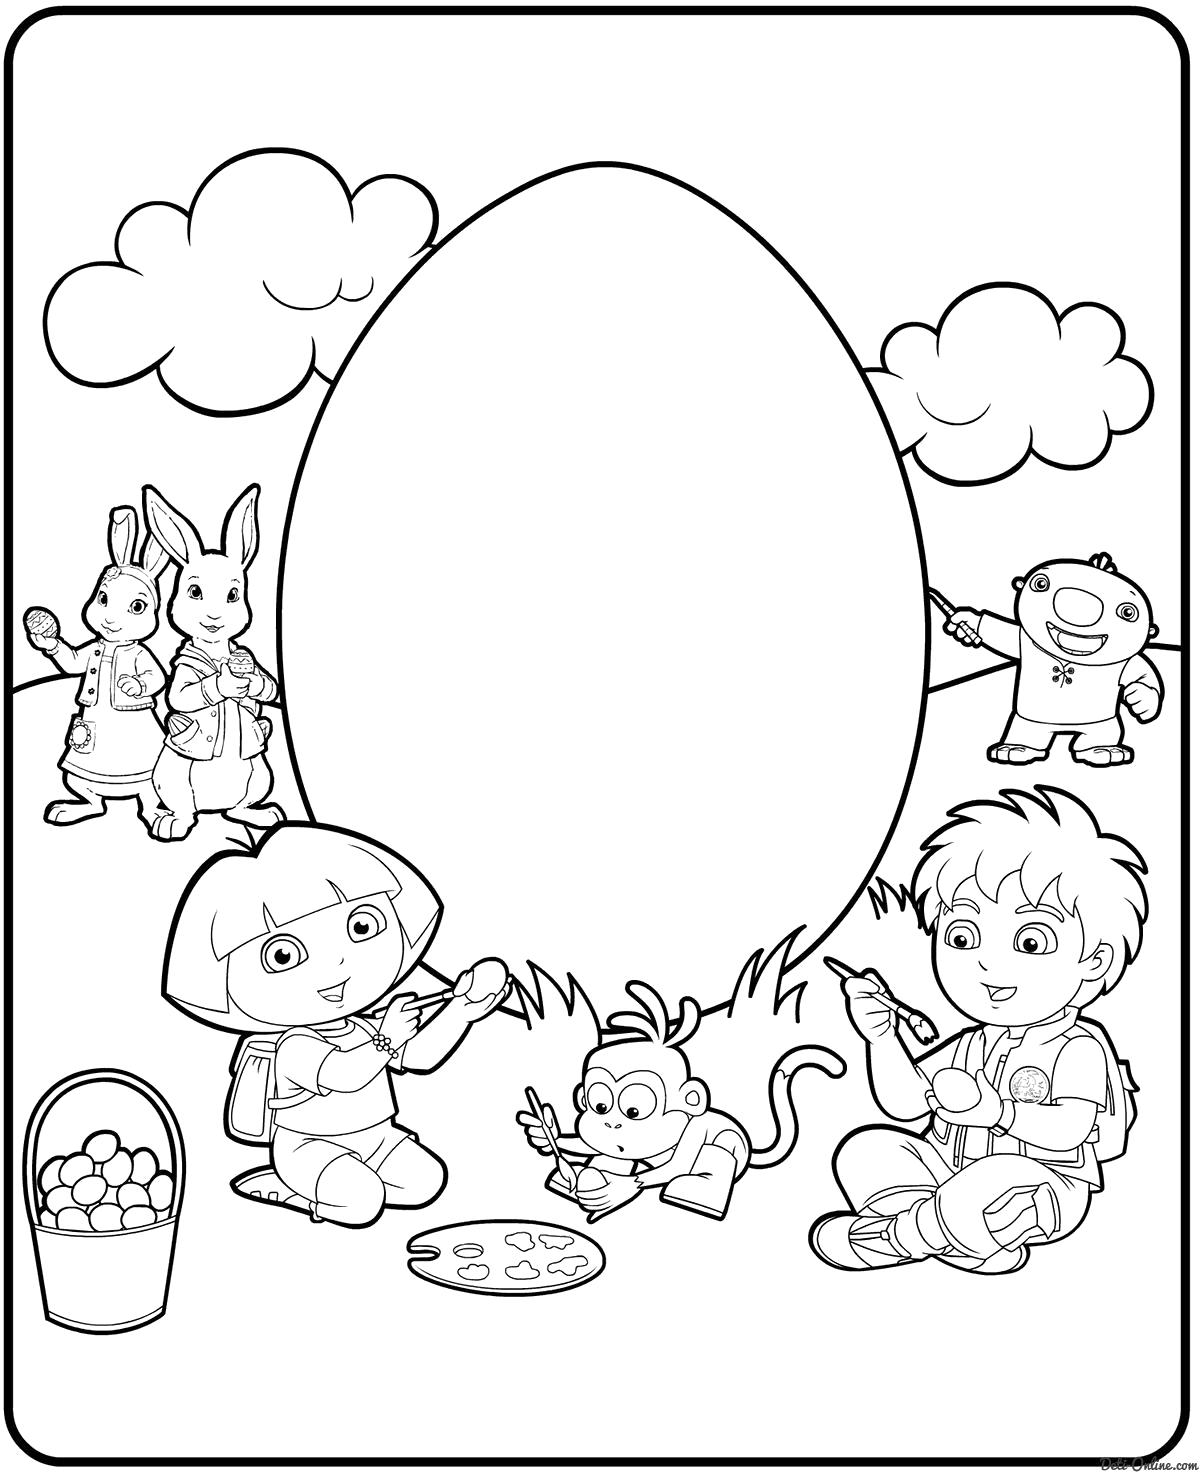 Раскраска Даша и пасхальные яйца. Пасха